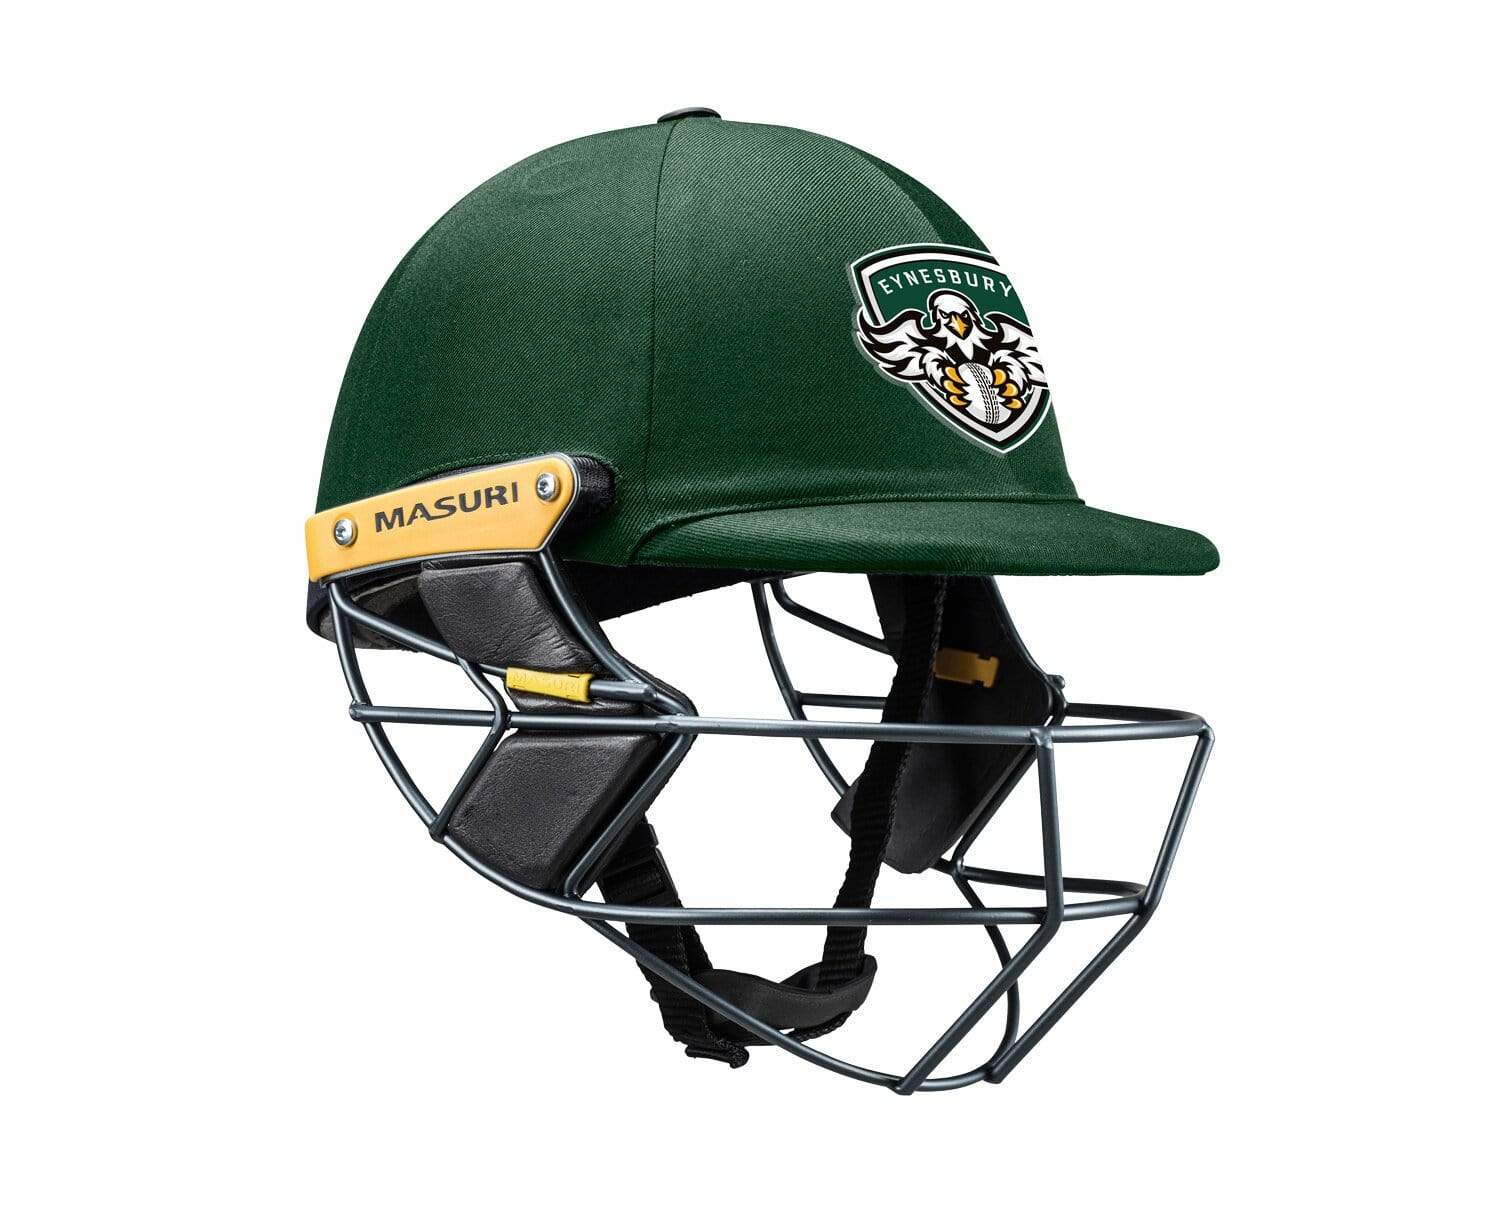 Masuri Club Helmet Eynesbury Cricket Club Helmet